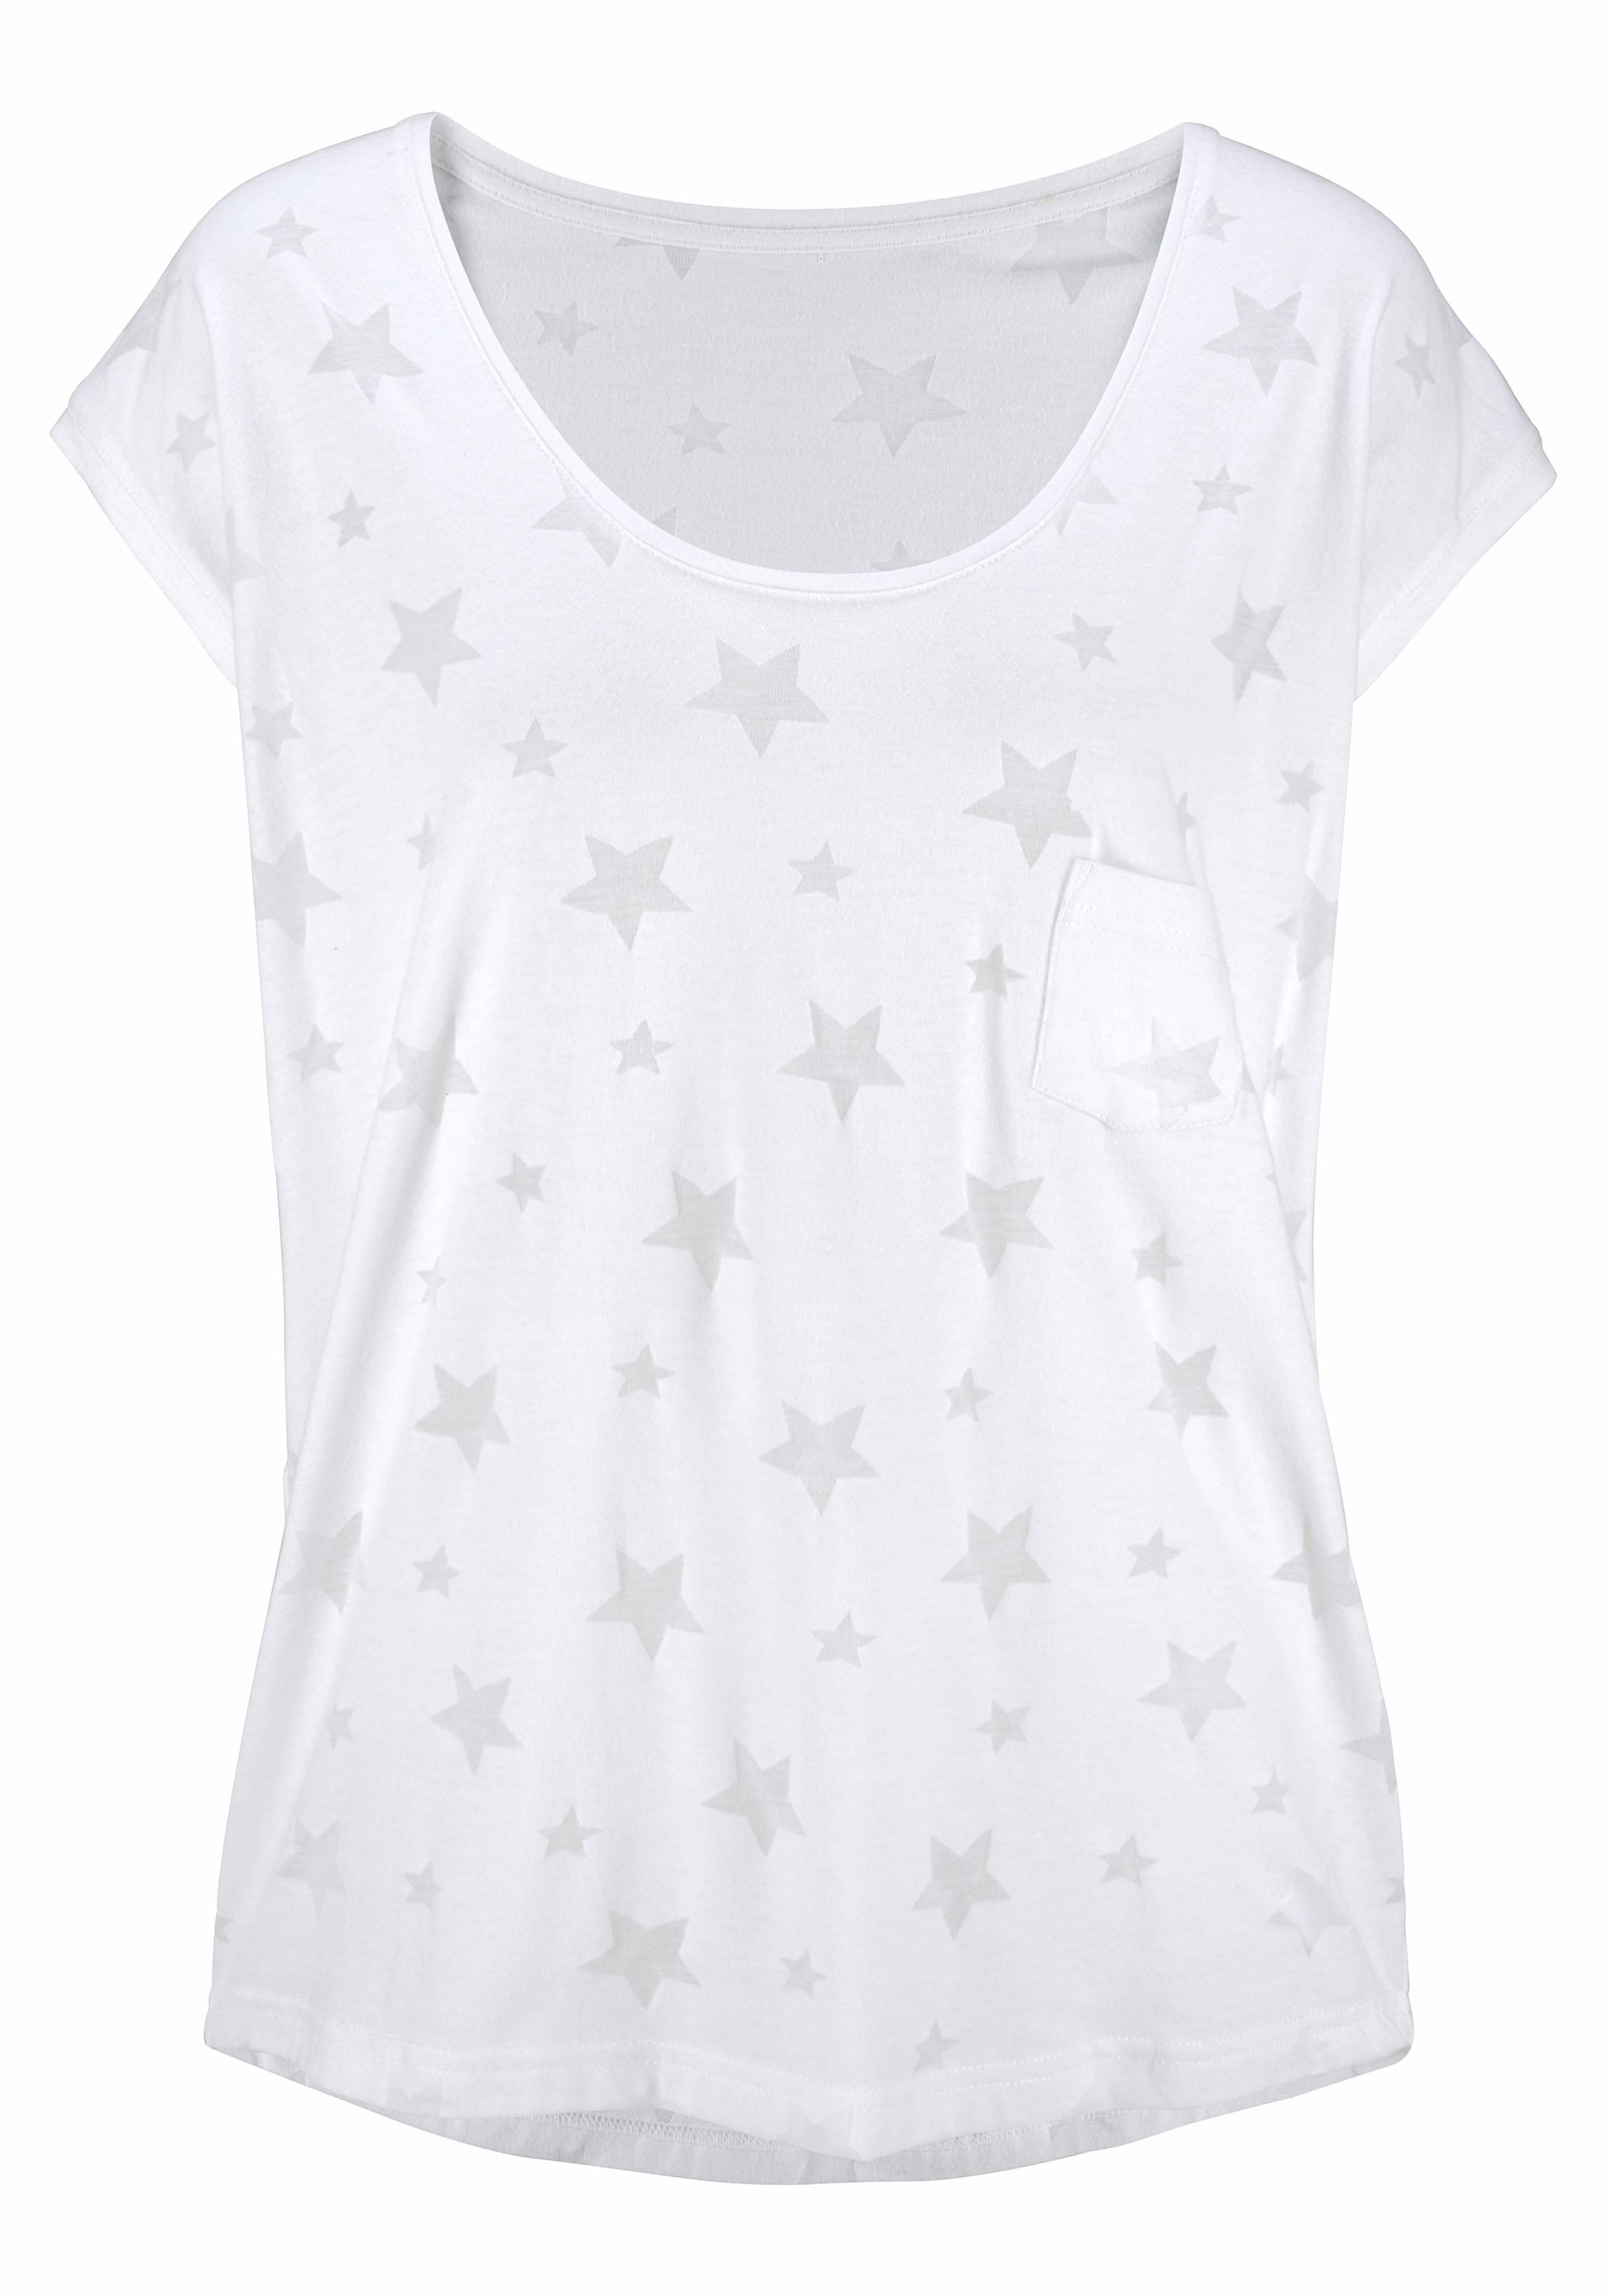 leicht transparenten (2er-Pack), Ausbrenner-Qualität T-Shirt, Sternen bestellen mit Beachtime